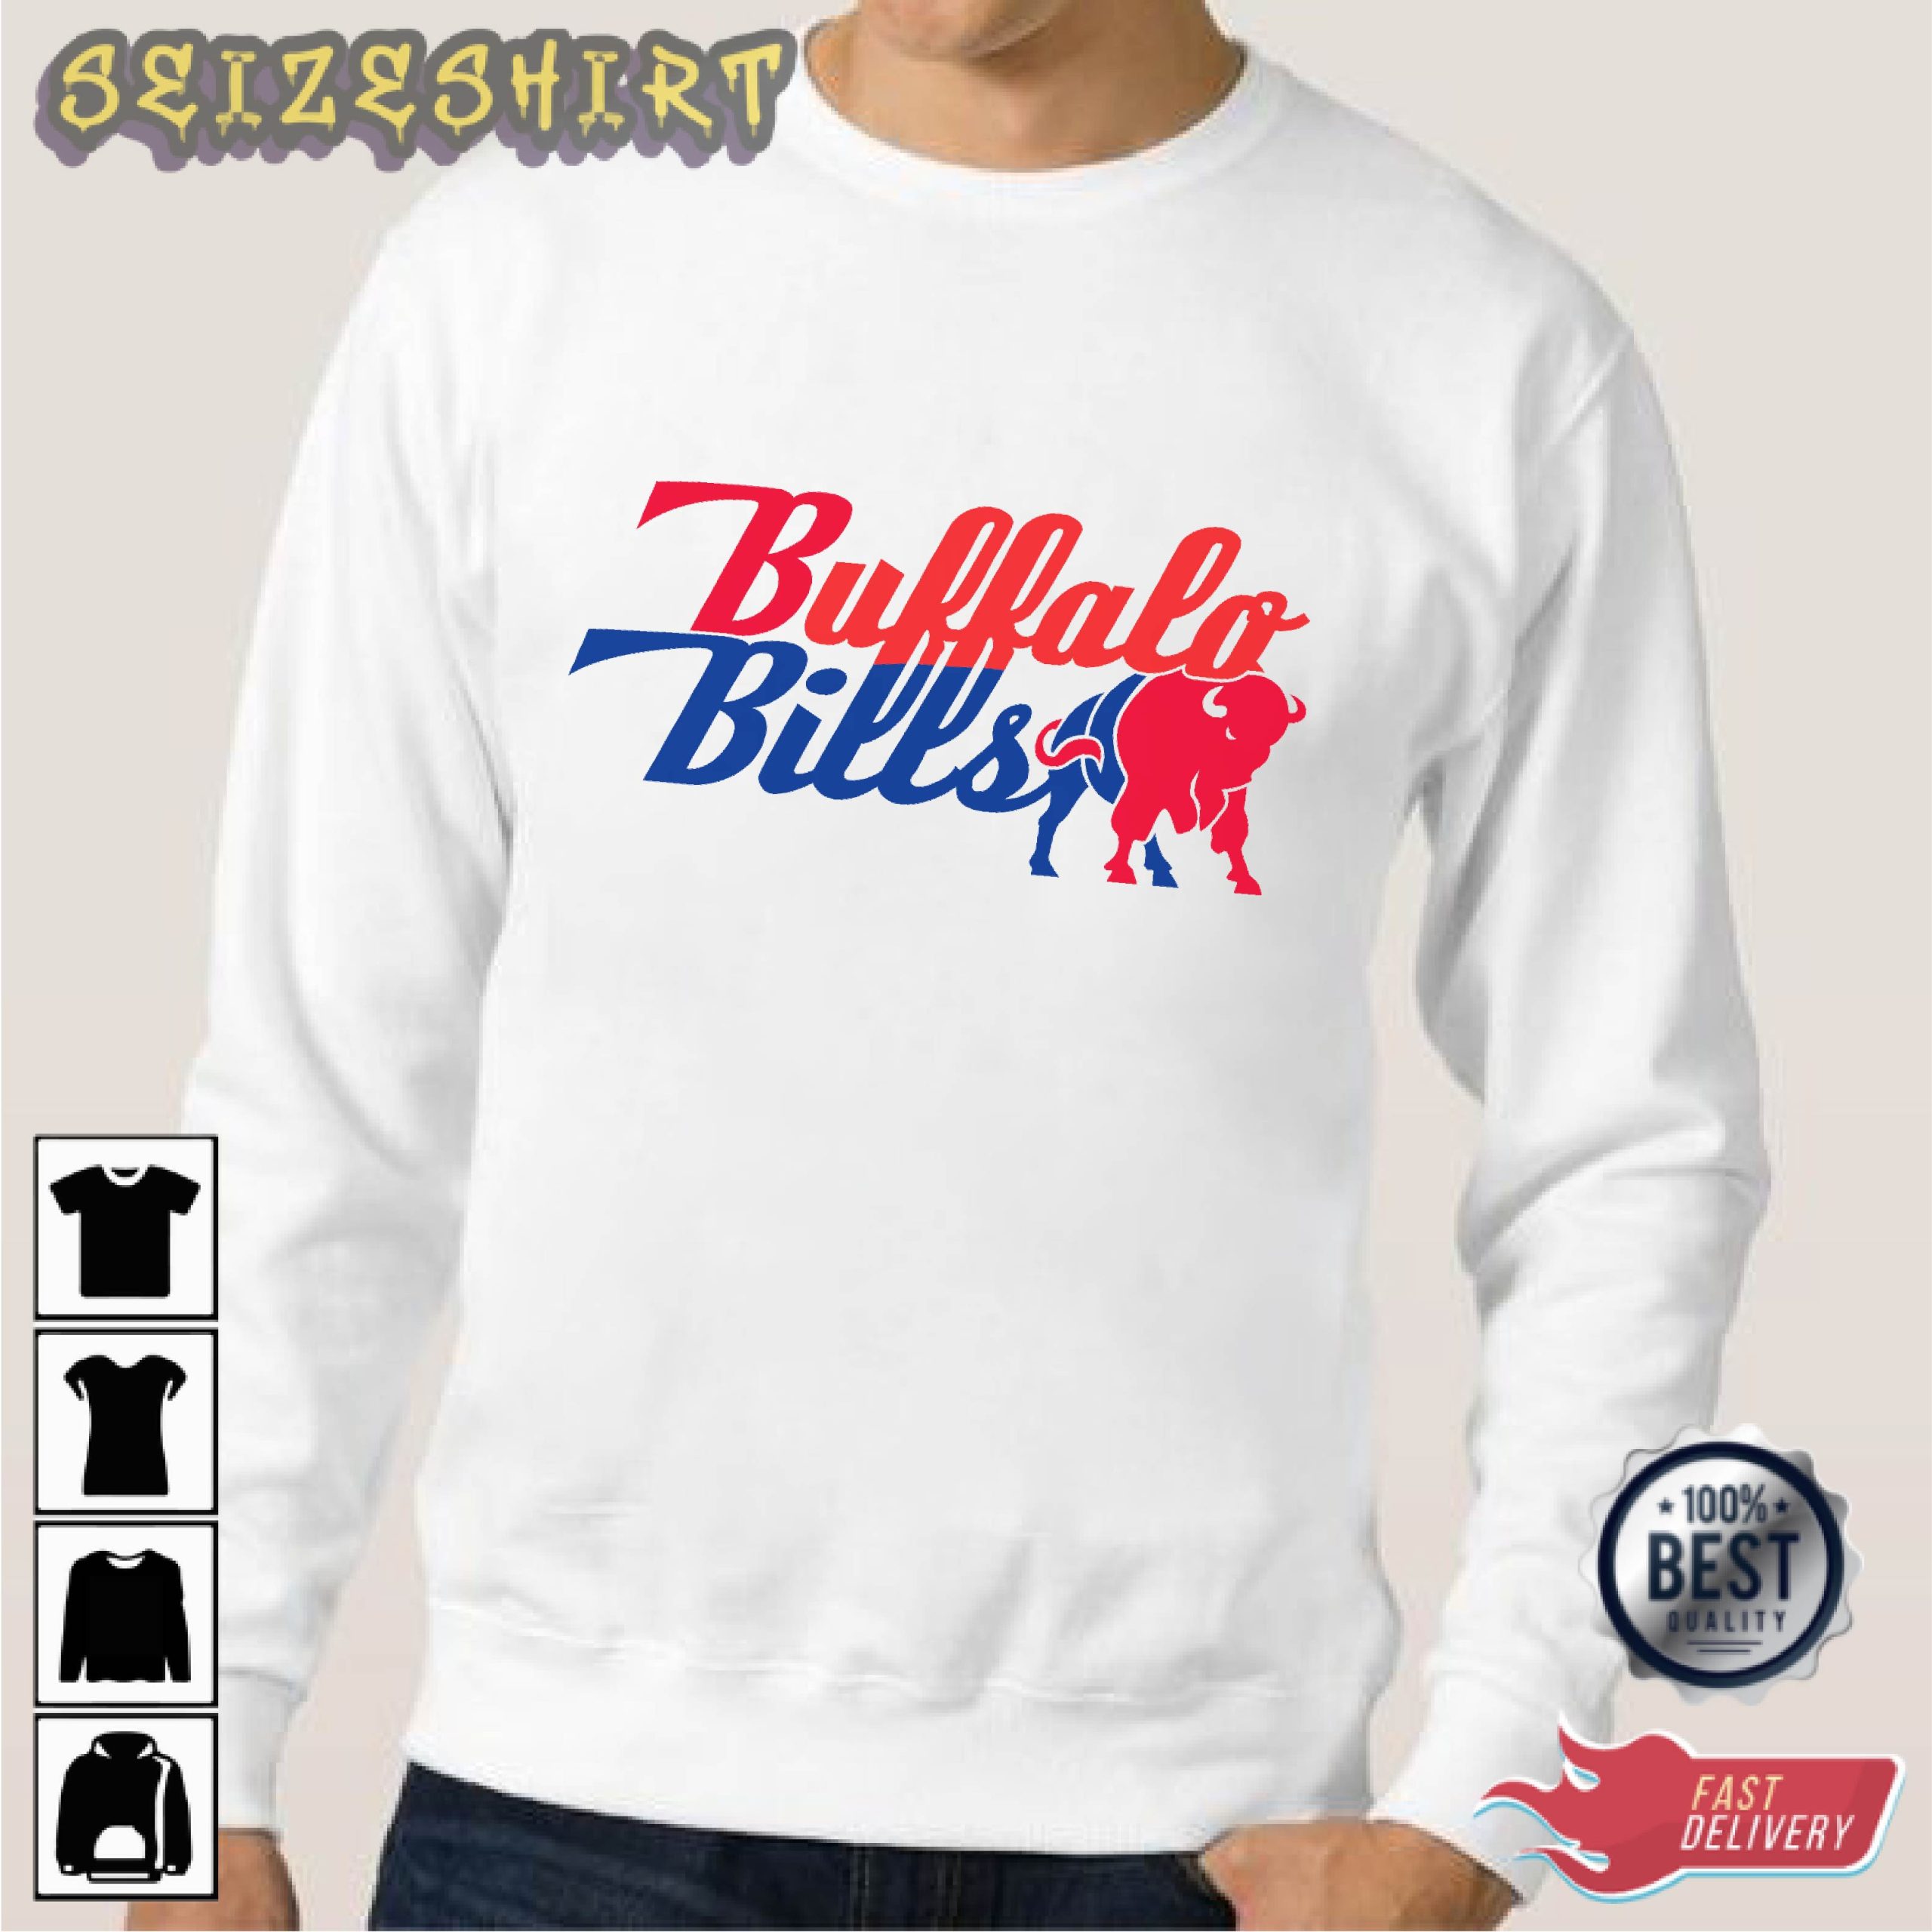 Buffalo Bills Hottopic Graphic Tee